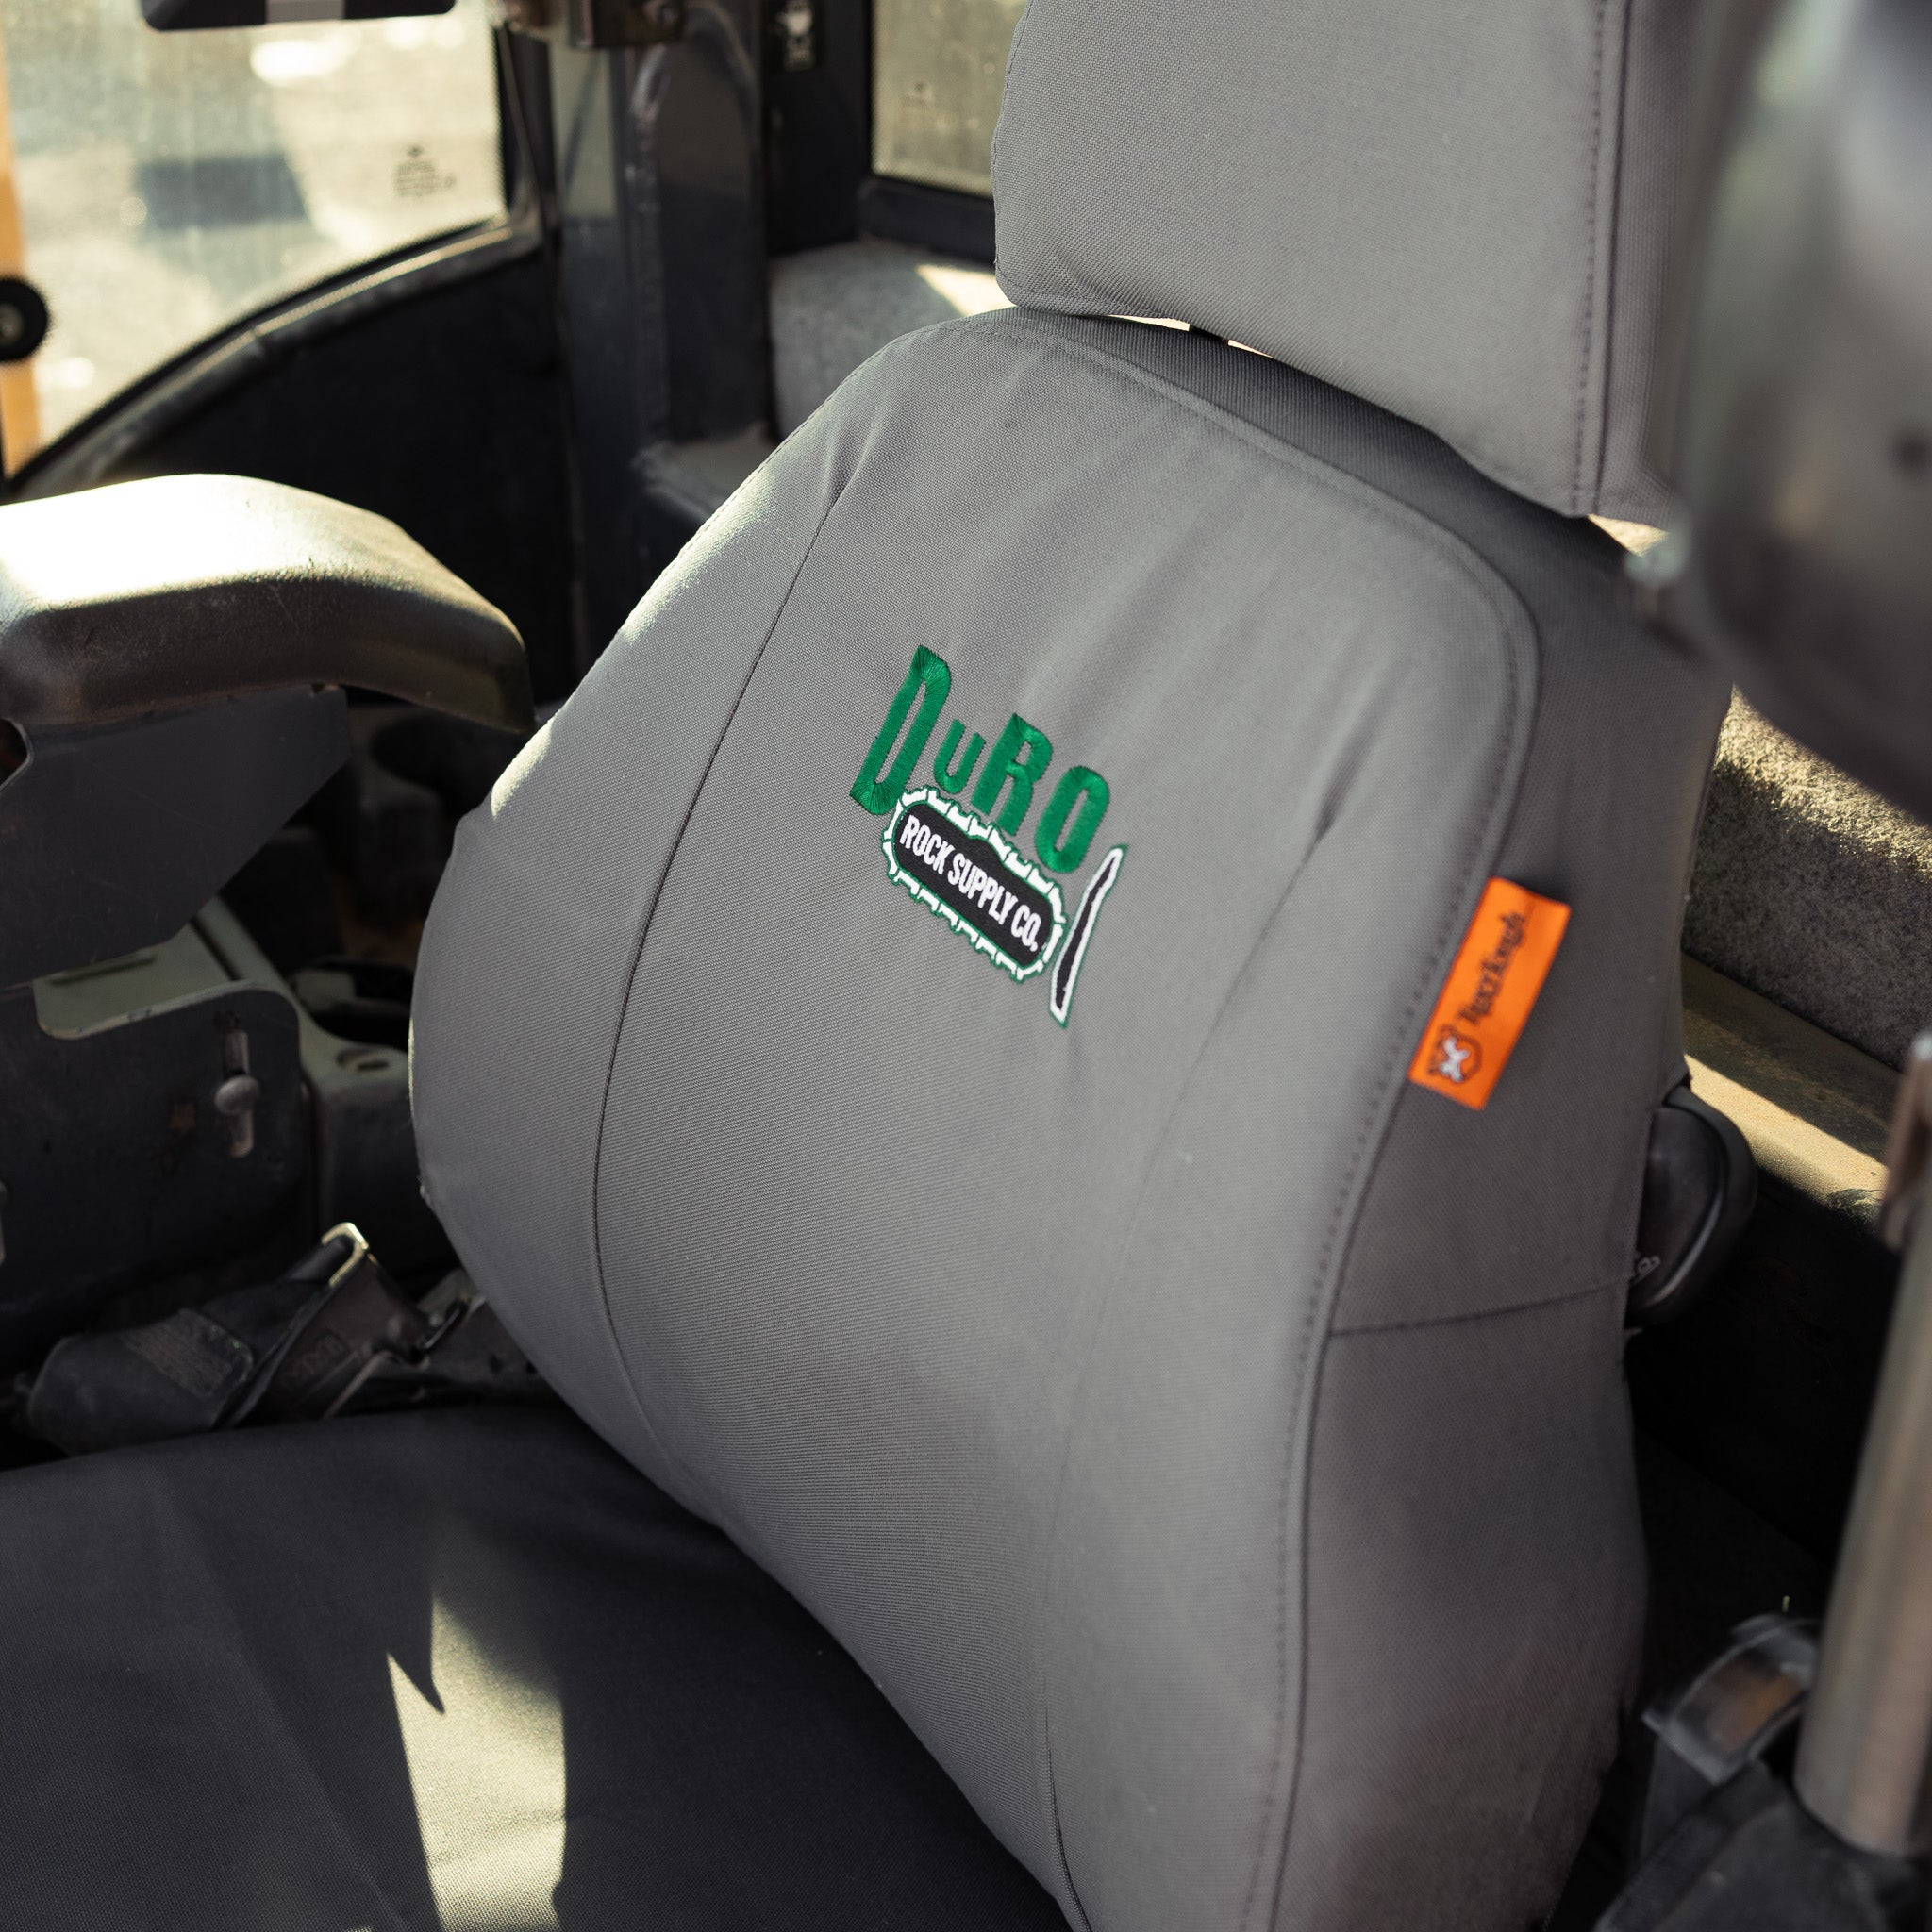 Deere Seat Cover (E82242)